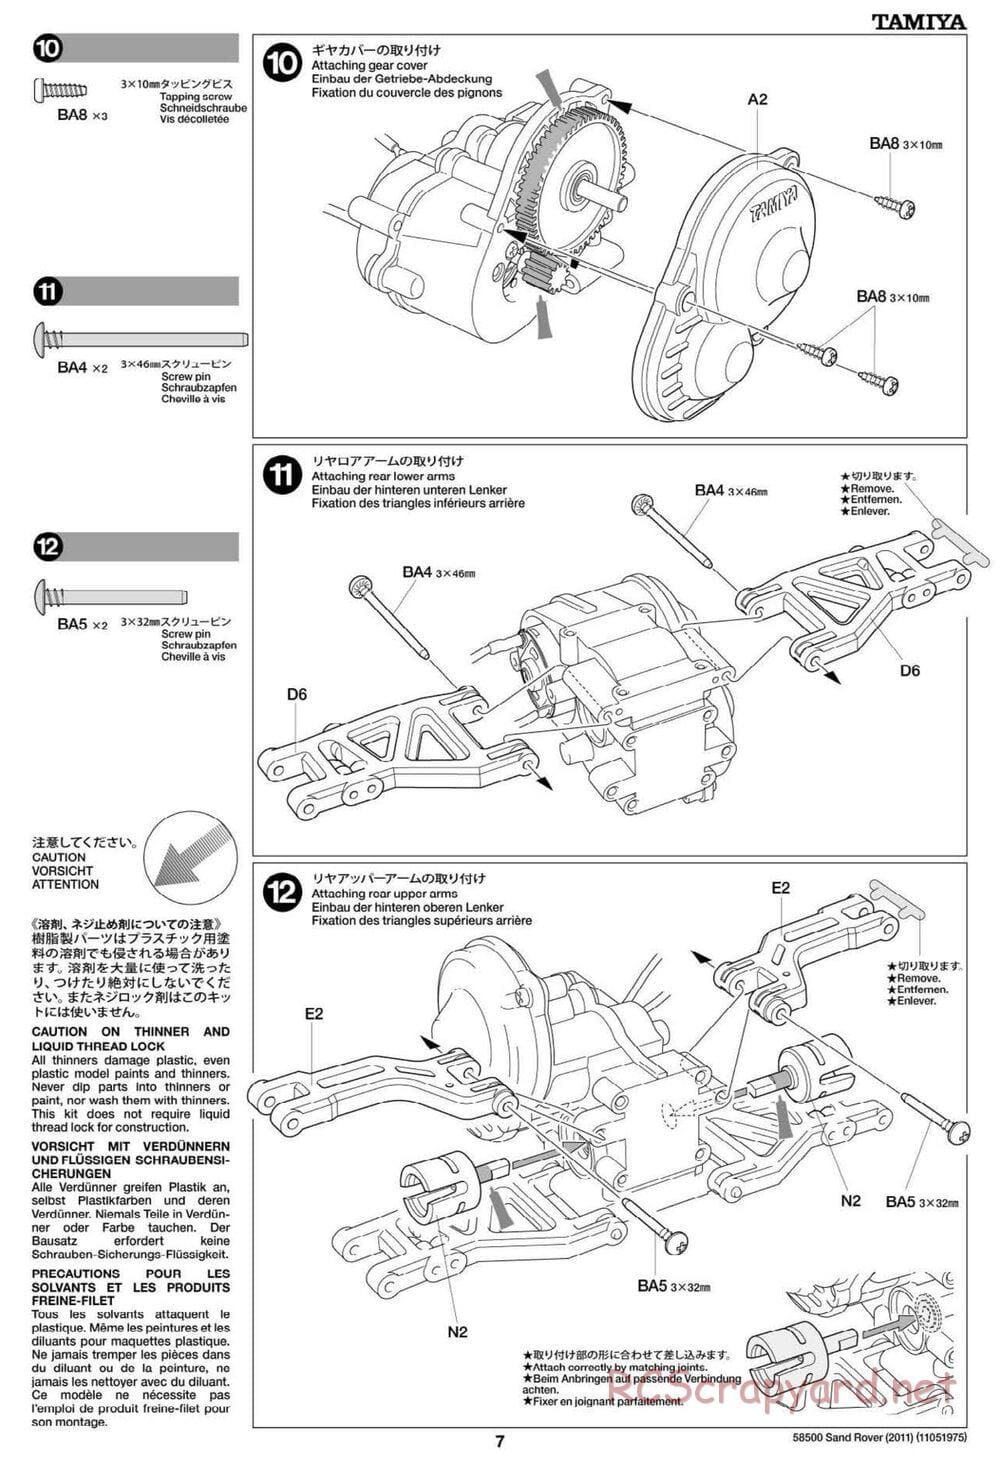 Tamiya - Sand Rover 2011 Chassis - Manual - Page 7